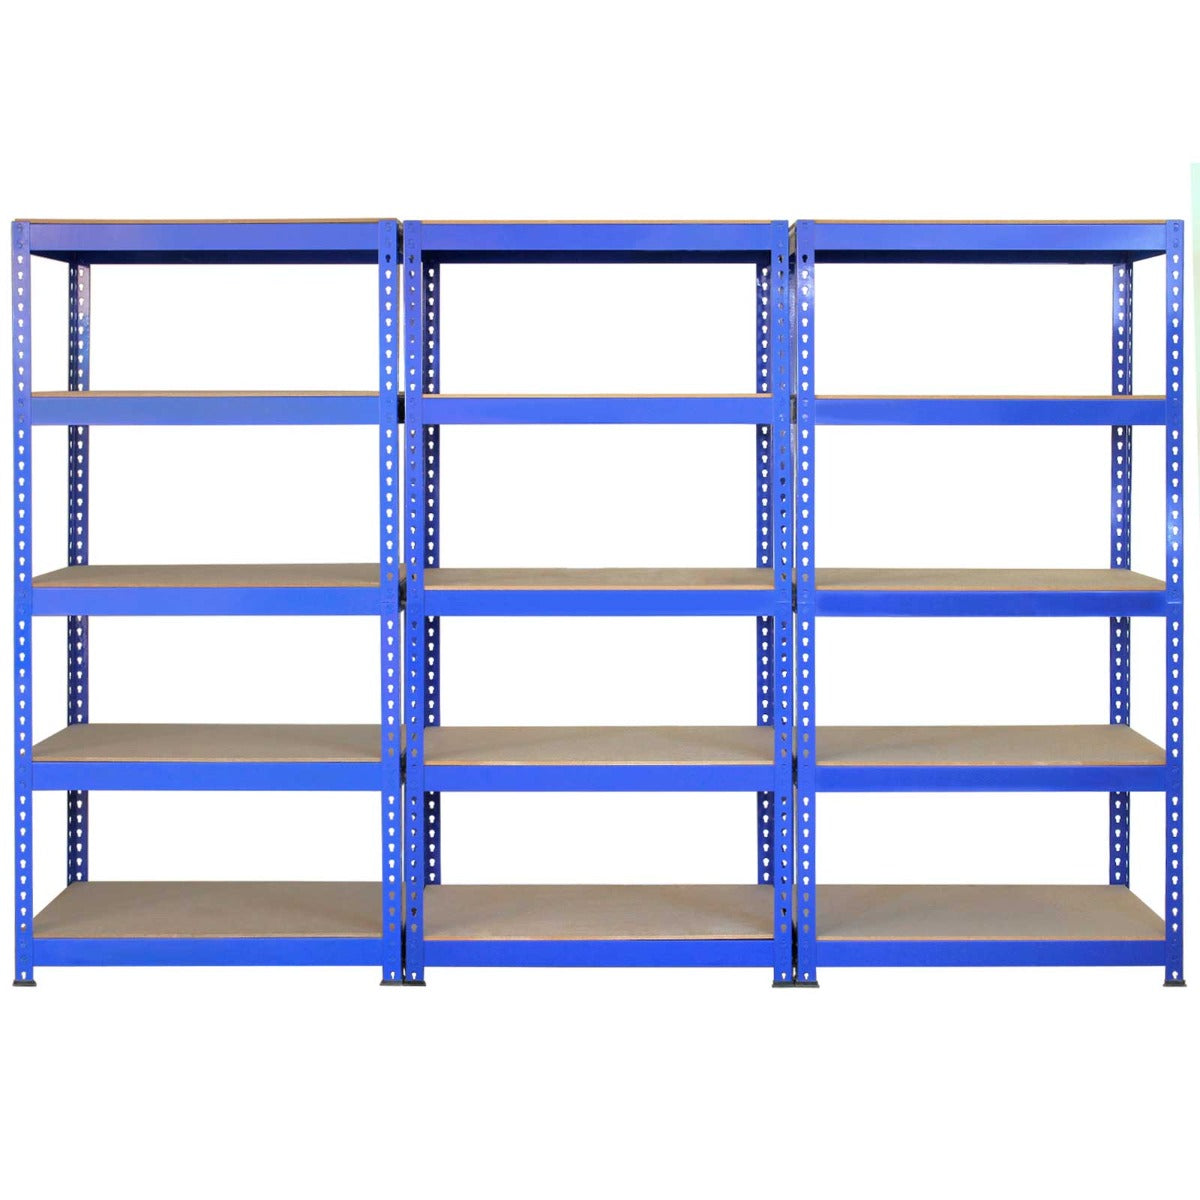 5 x Unidades de estantería metálicas Q-Rax en color azul de 90 x 50 x 180 cm